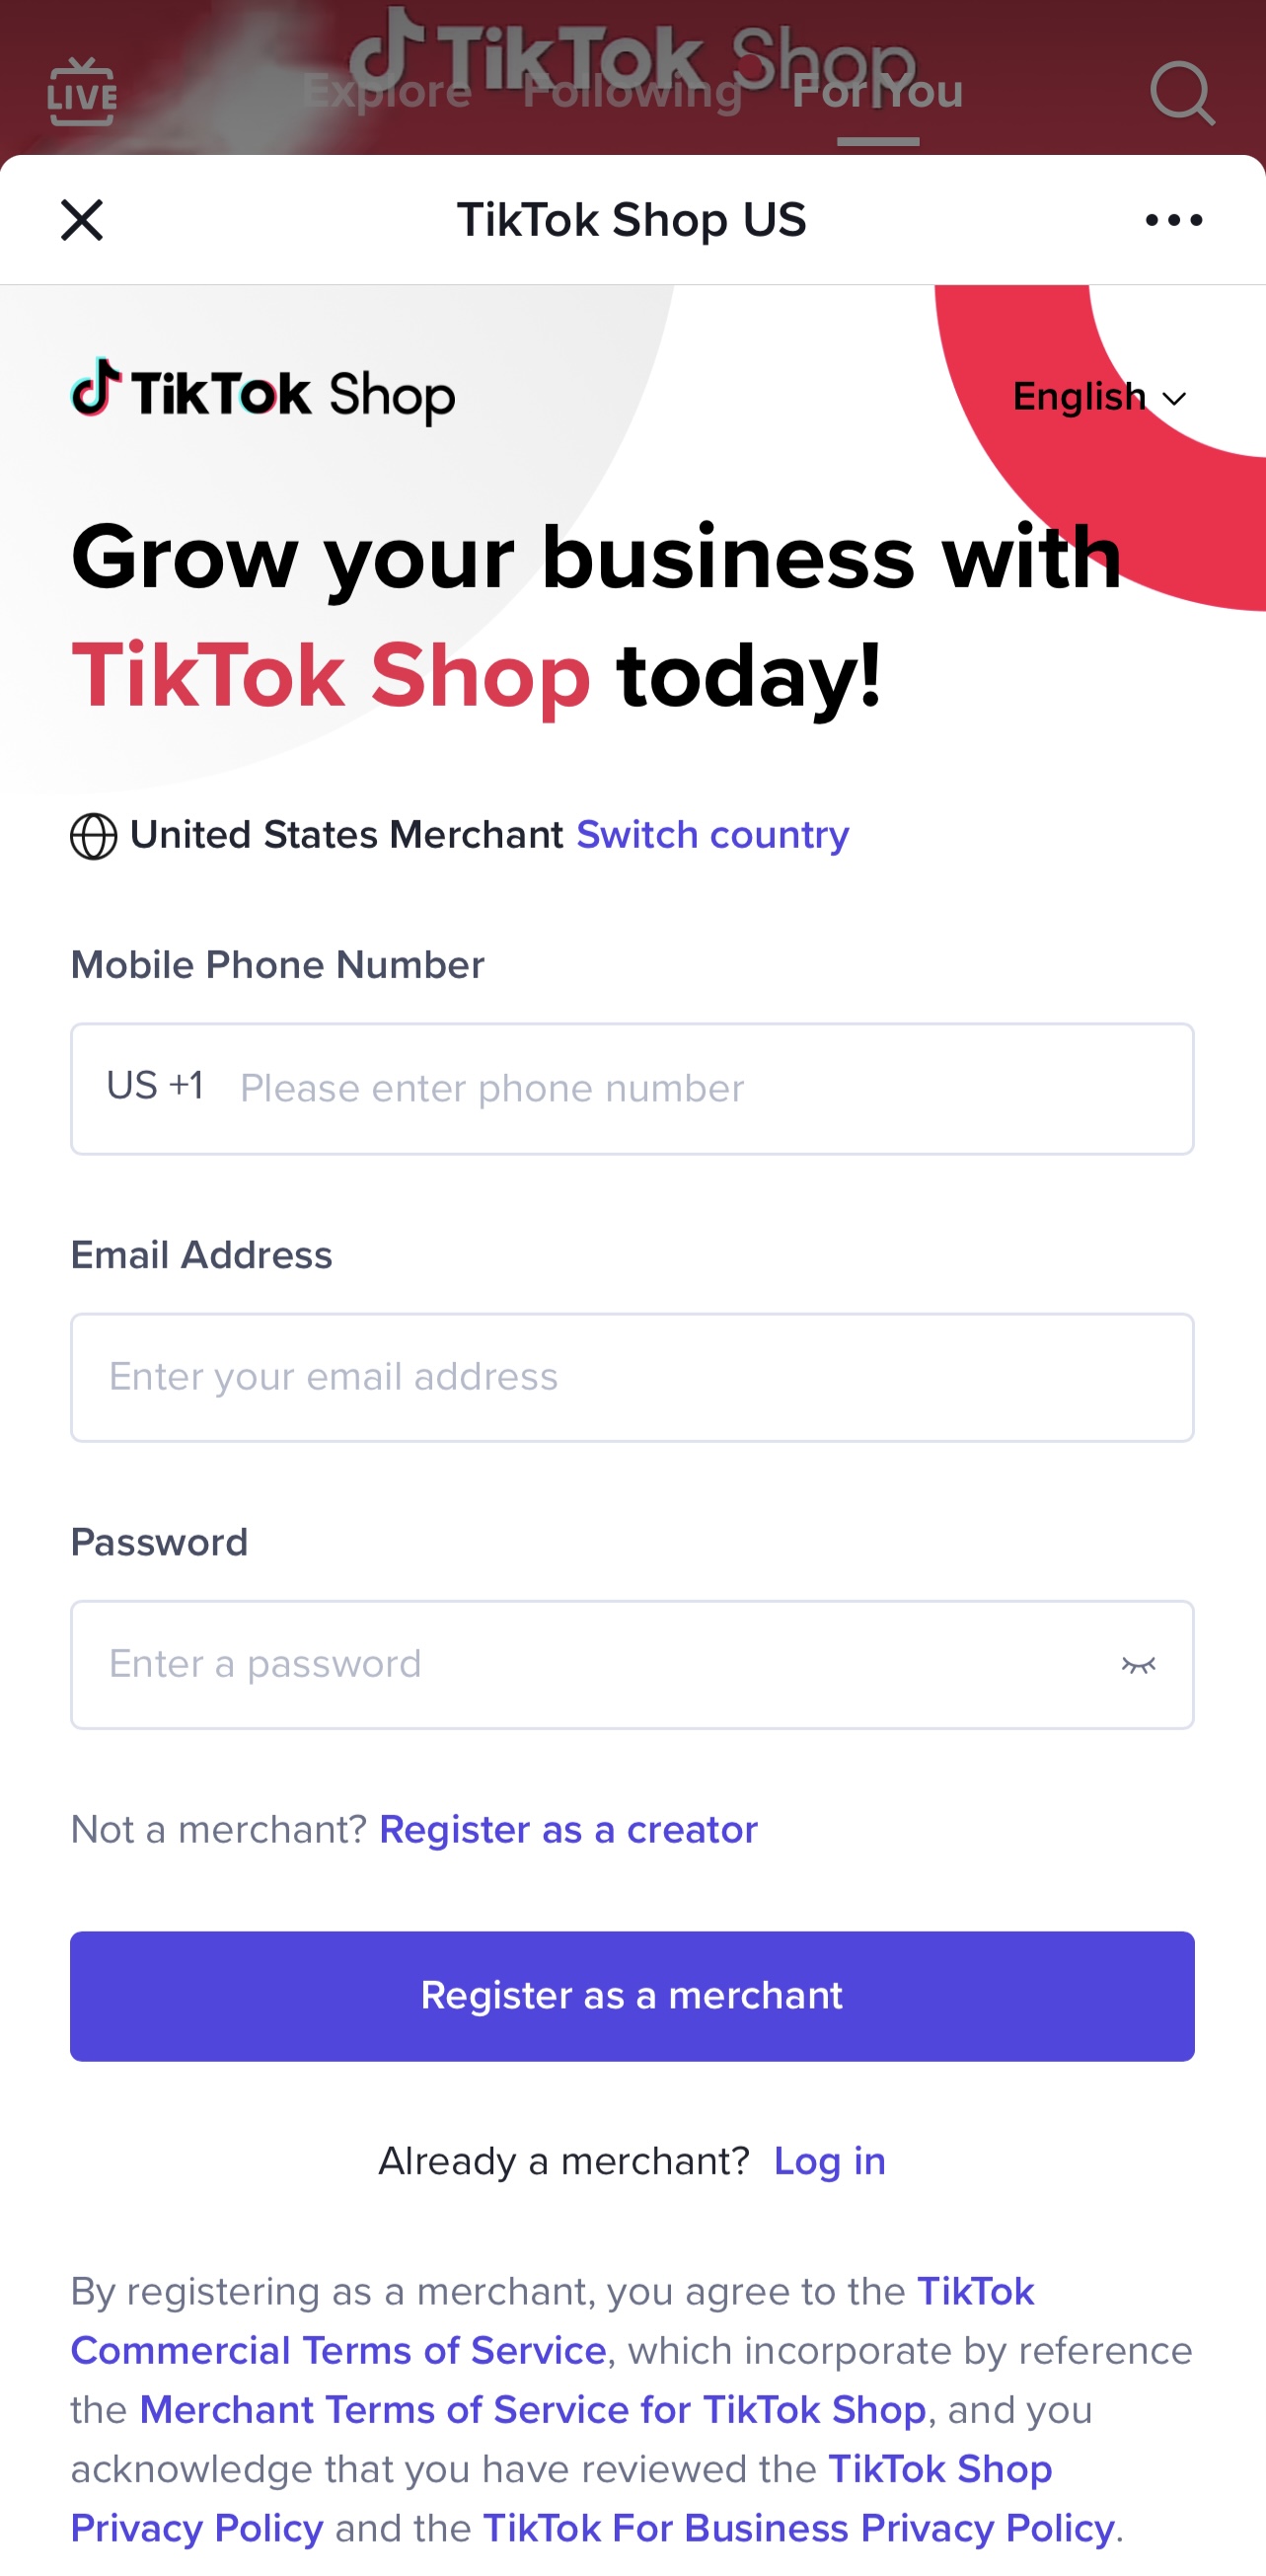 TikTok Shop: Social Commerce For Brands And Influencers